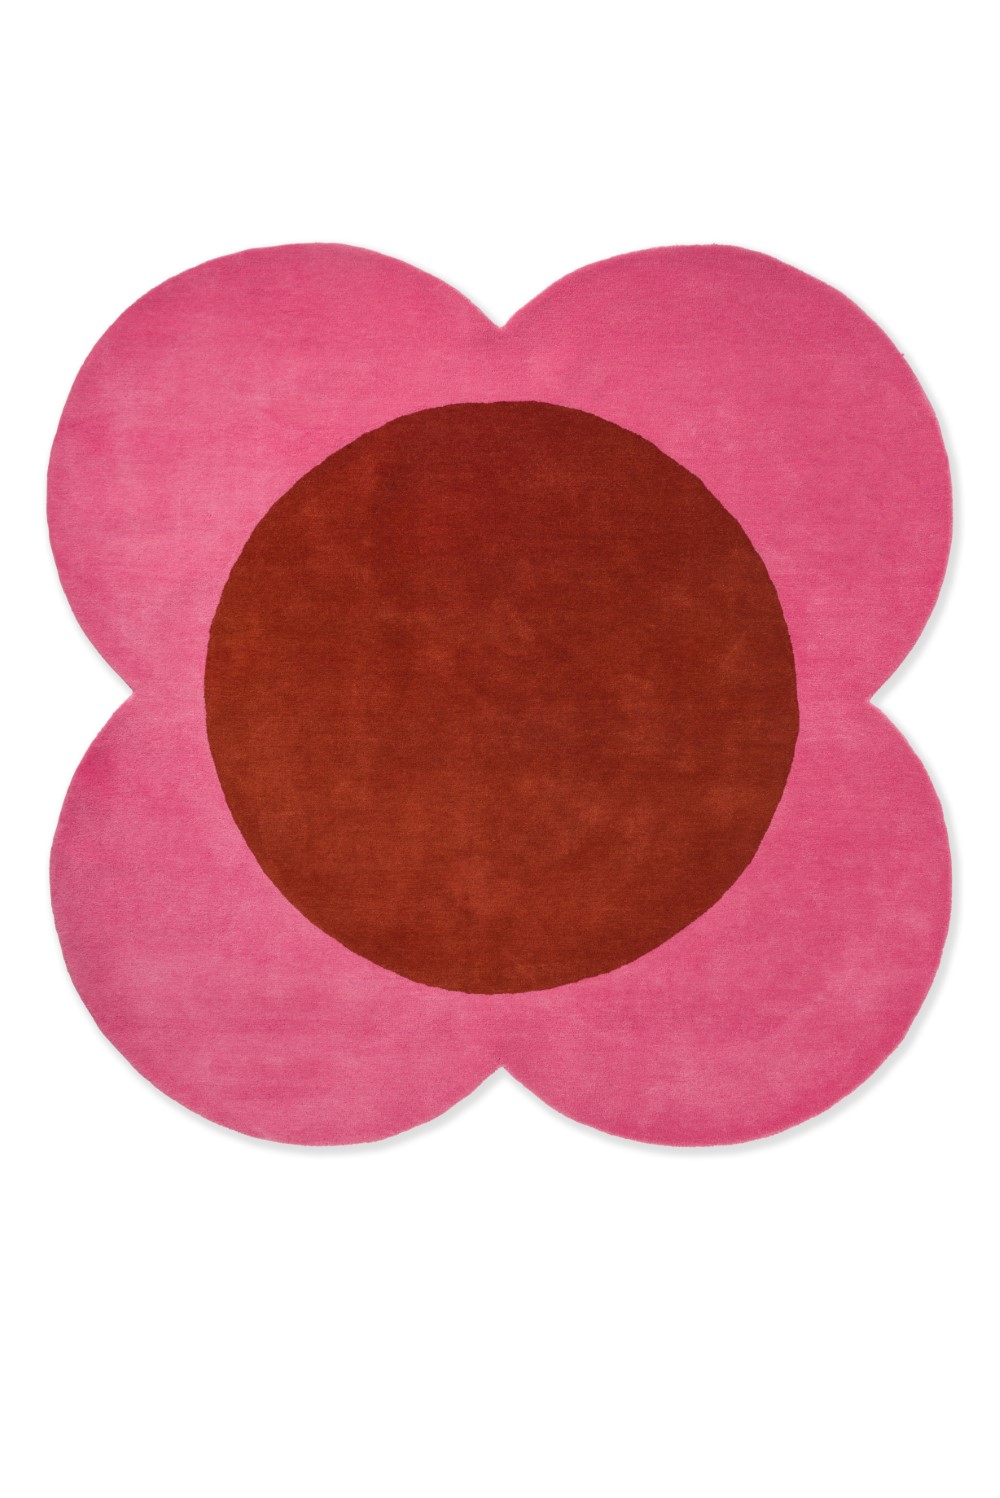 orla-kiely-rug-flower-spot-pink-red-158400